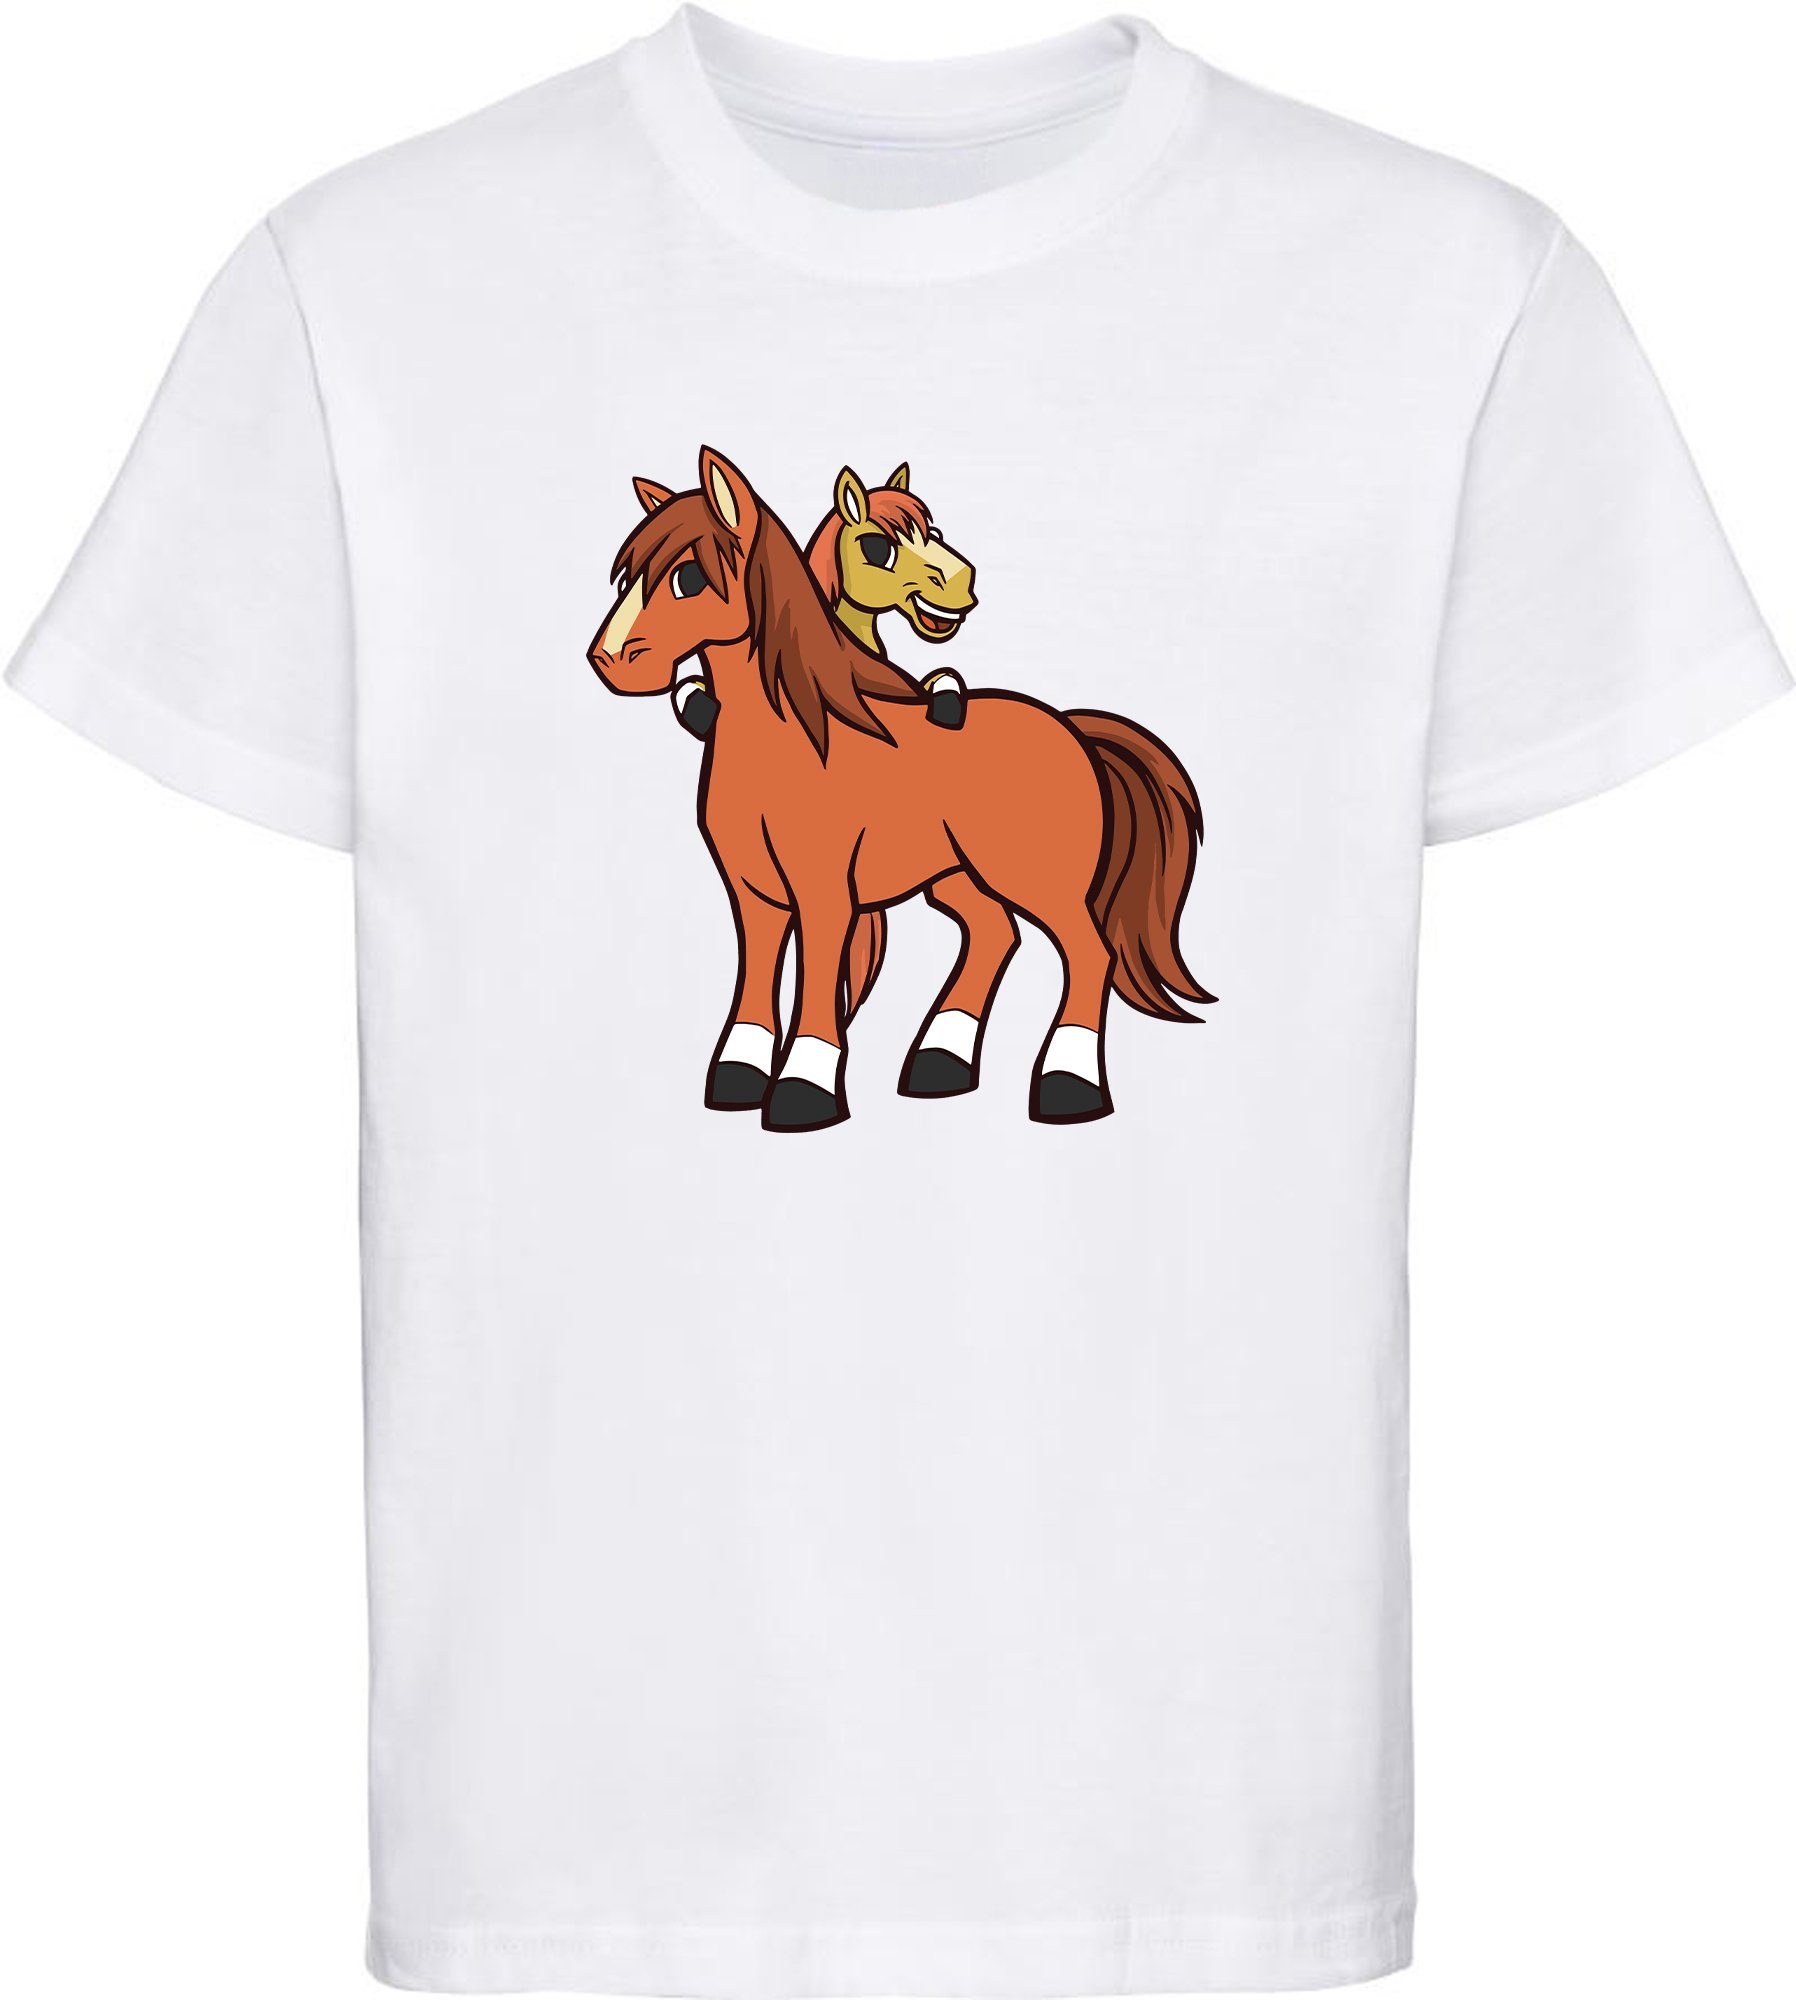 MyDesign24 T-Shirt Kinder Pferde Print Shirt bedruckt - 2 cartoon Pferde Baumwollshirt mit Aufdruck, i251 weiss